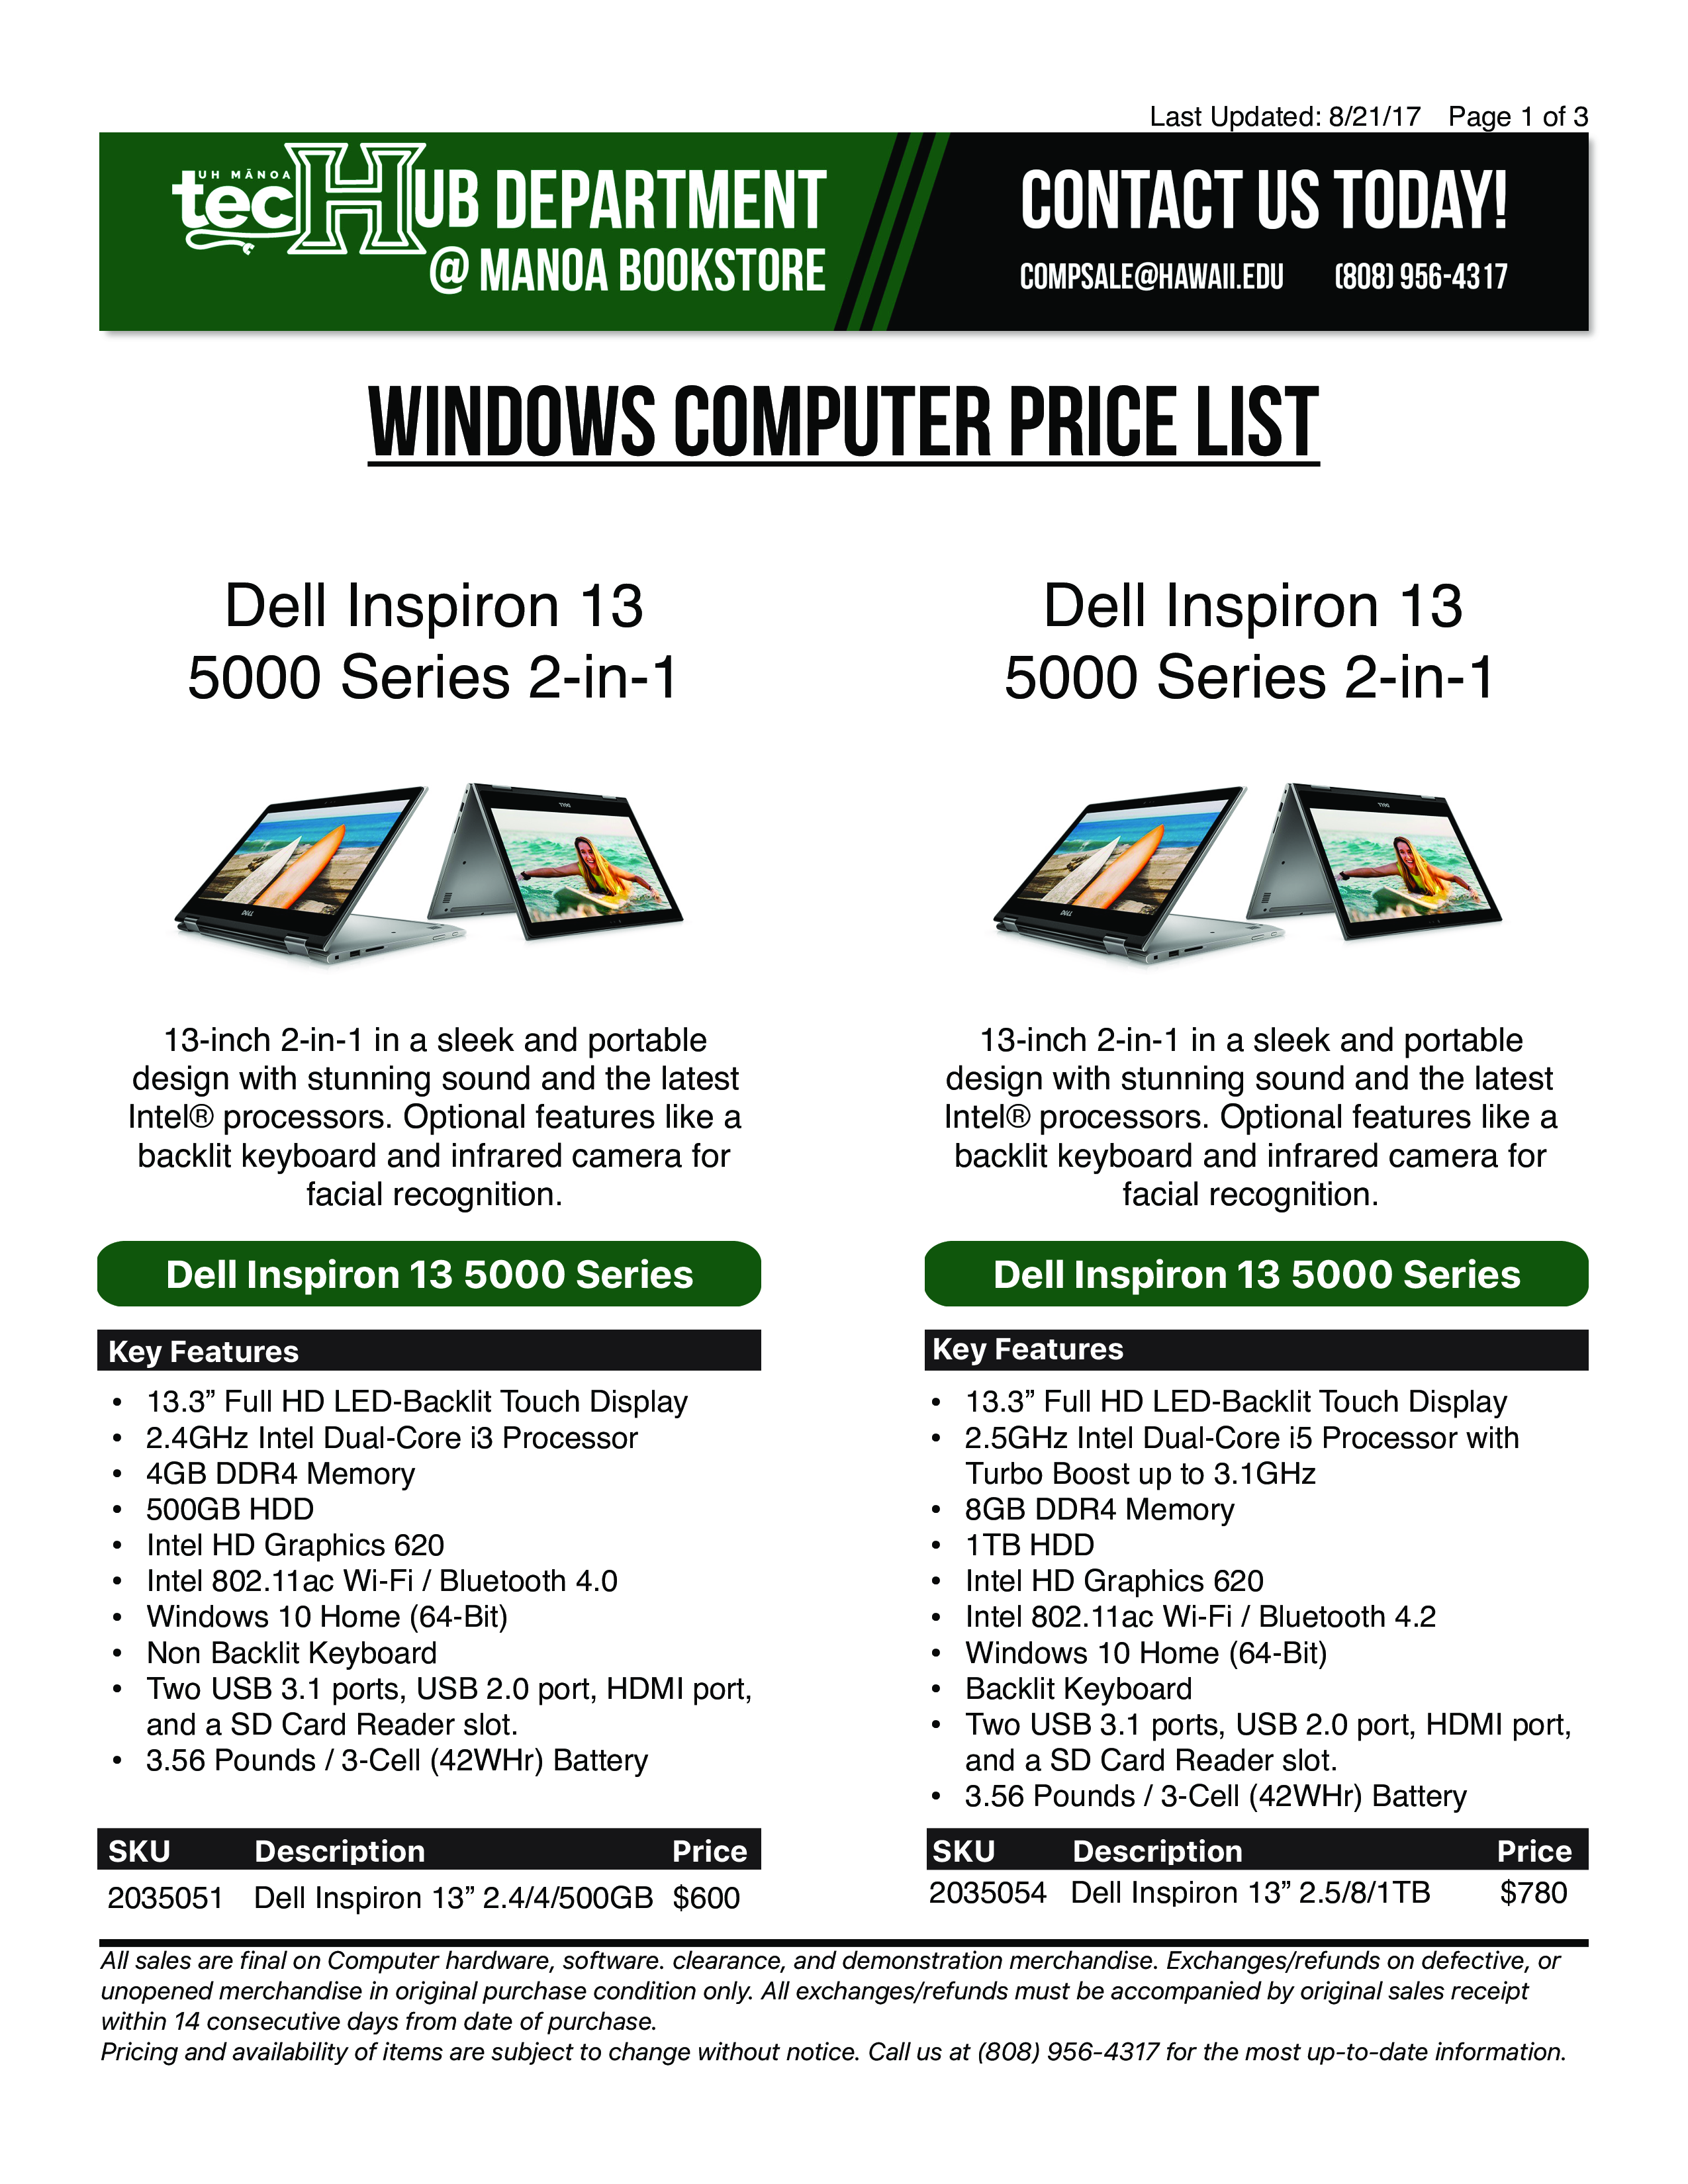 Windows Computers Price List main image